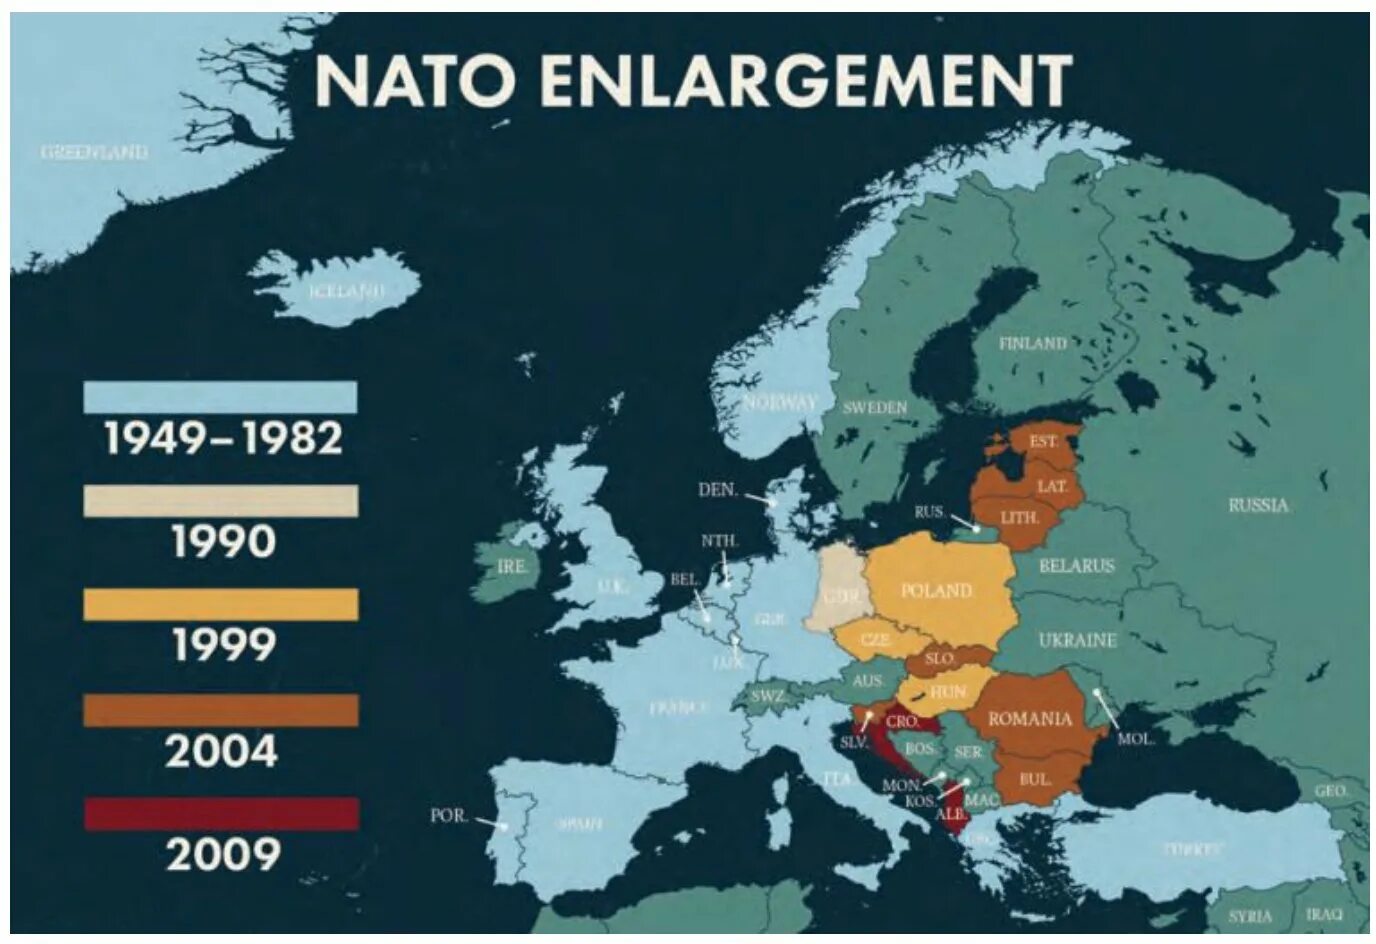 Границы НАТО 1997. Карта расширения НАТО С 1997 года. Границы НАТО 1997 года. Расширение НАТО на Восток в 1990-е.